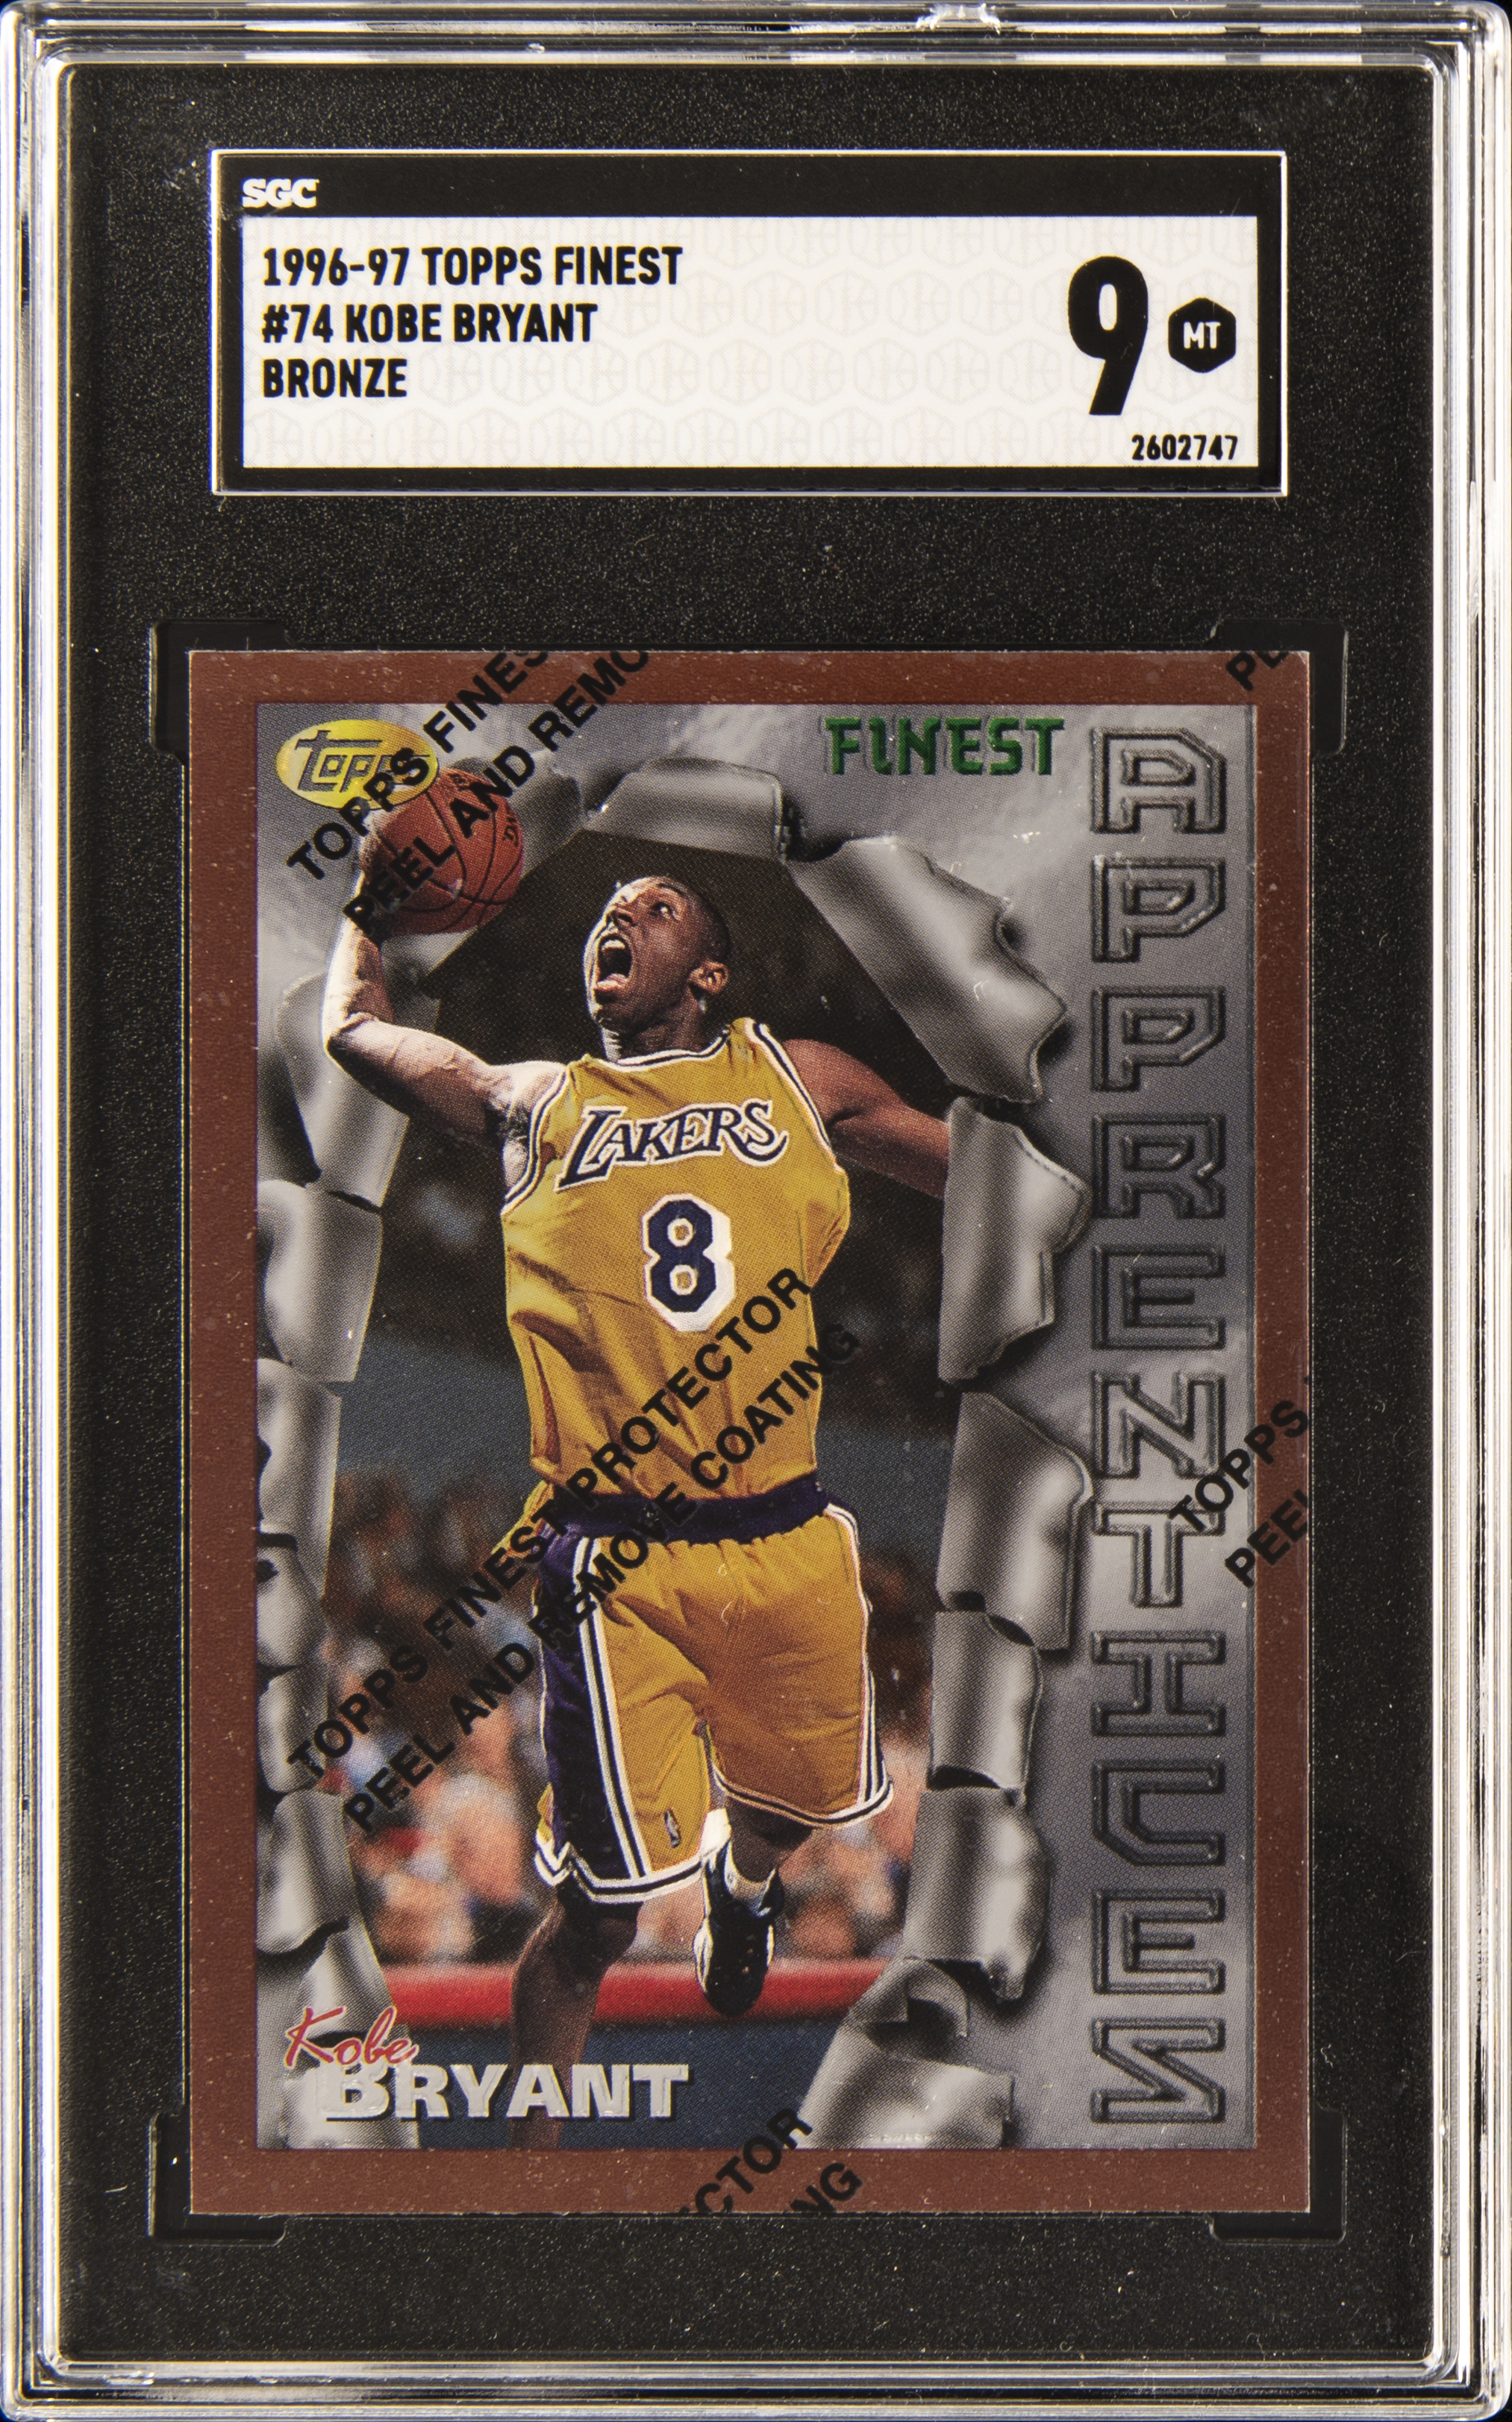 1996-97 Topps Finest Bronze #74 Kobe Bryant Rookie Card - SGC MT 9